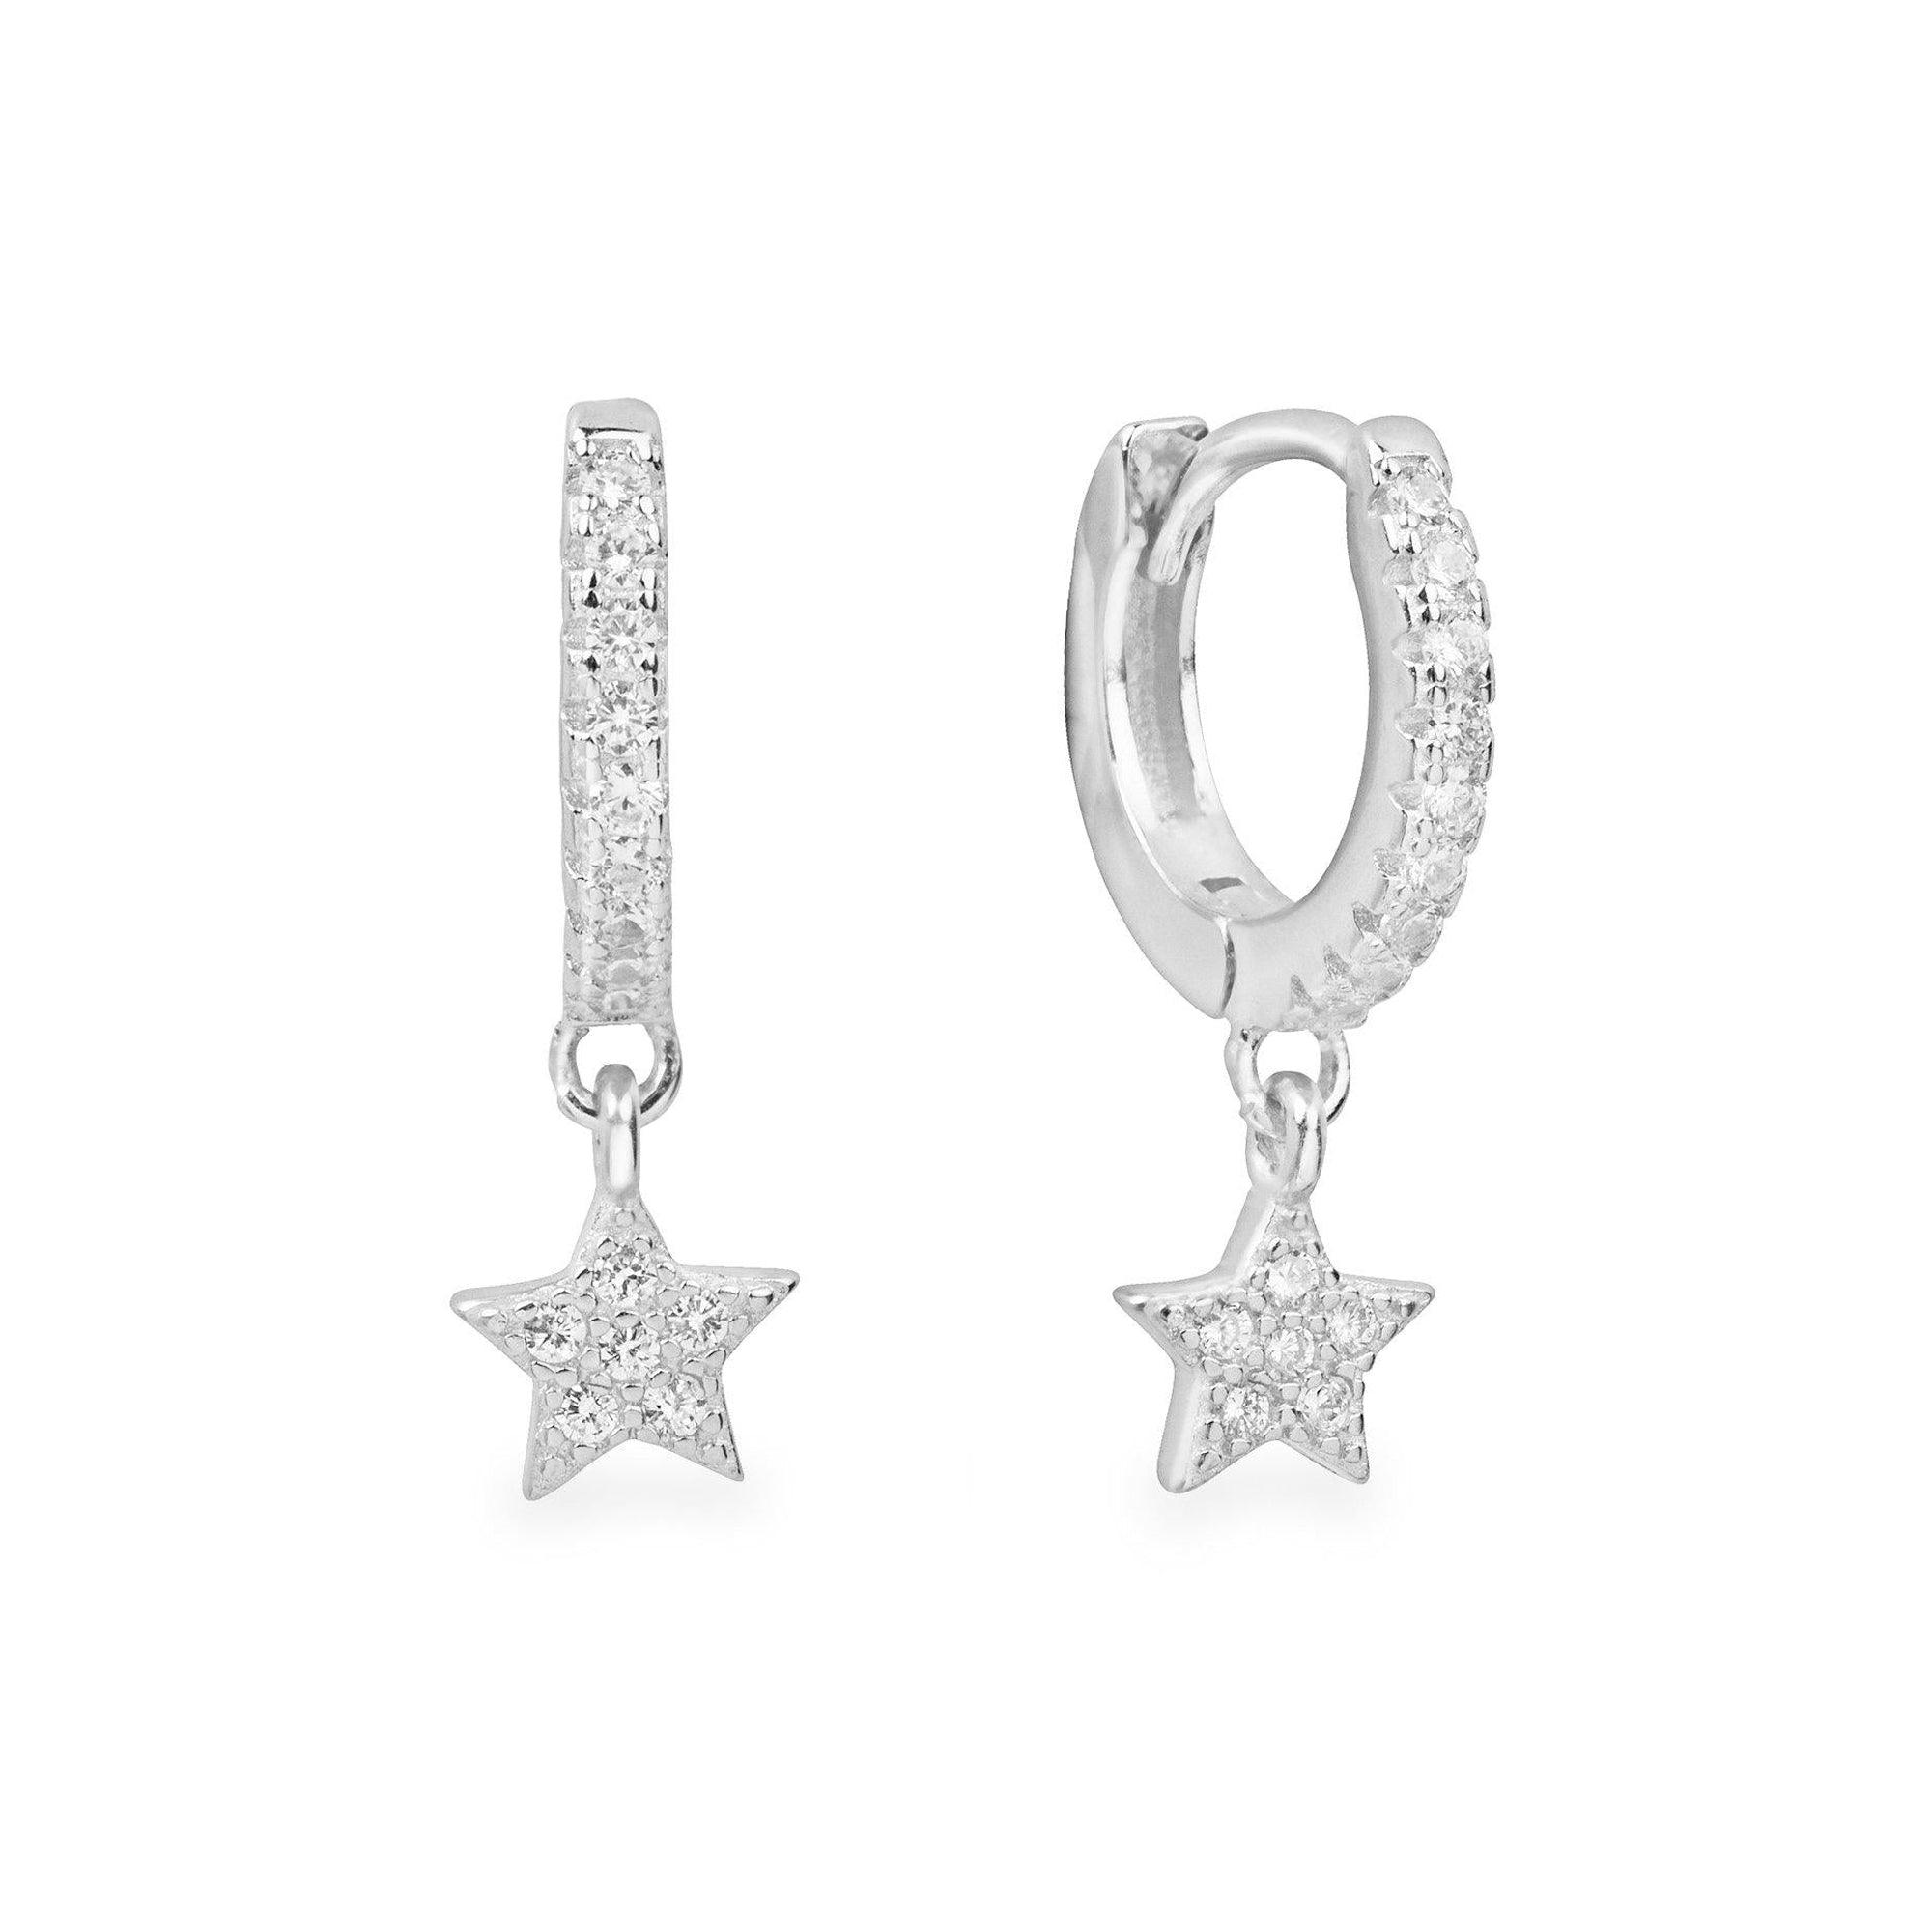 Celestial pair of white gold star huggie hoop earrings - Helix & Conch